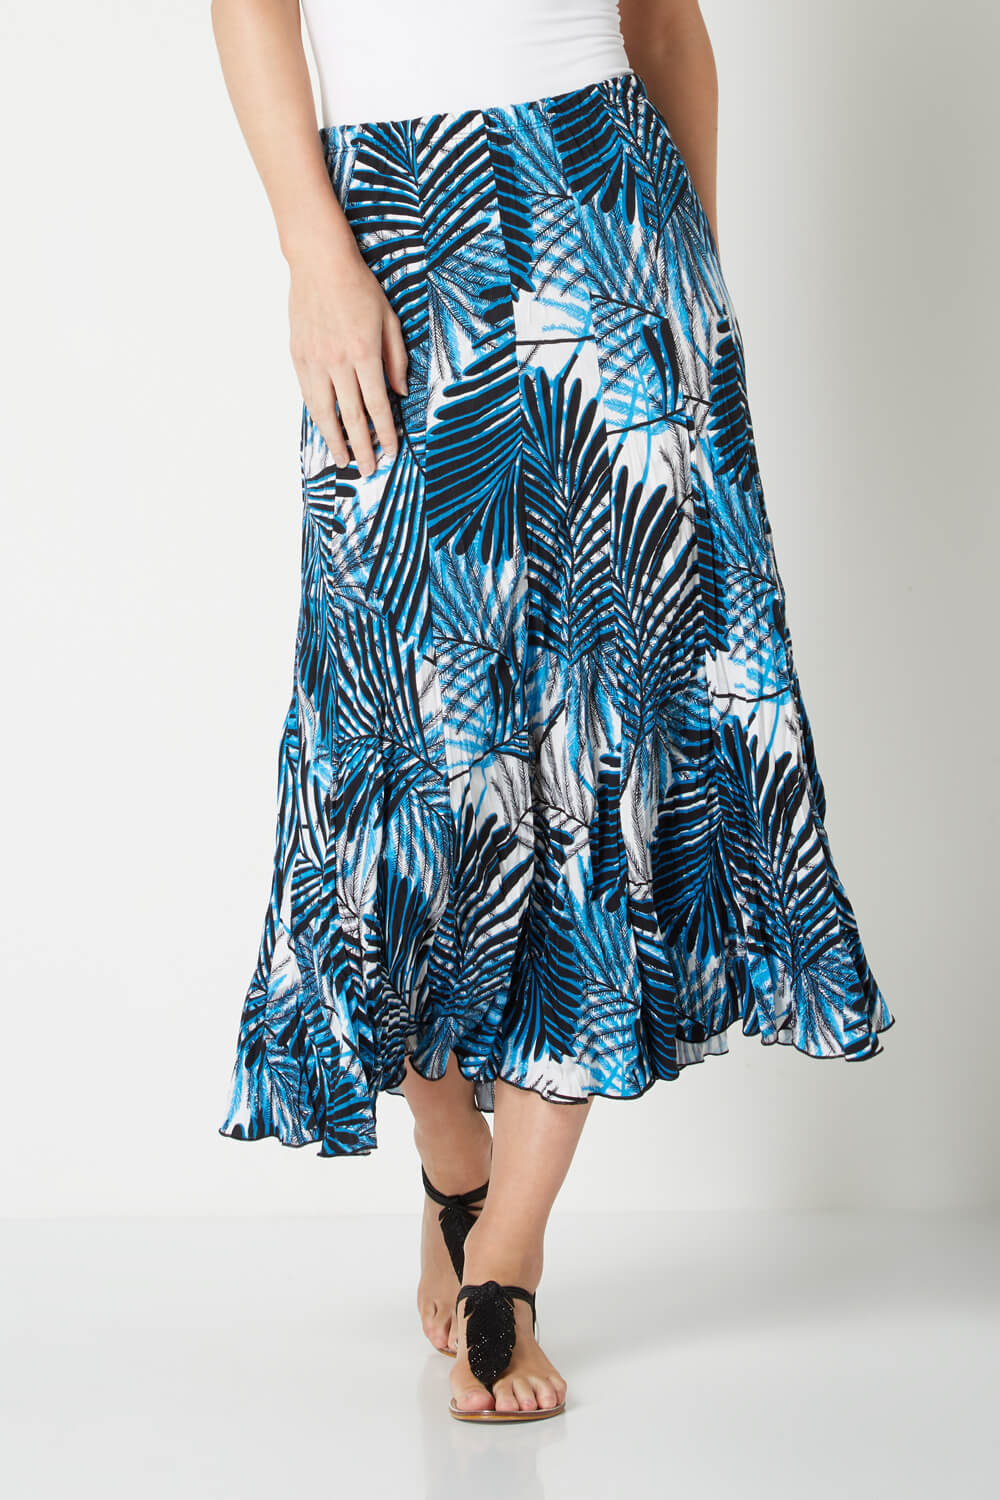 Tropical Print Maxi Skirt in Turquoise - Roman Originals UK